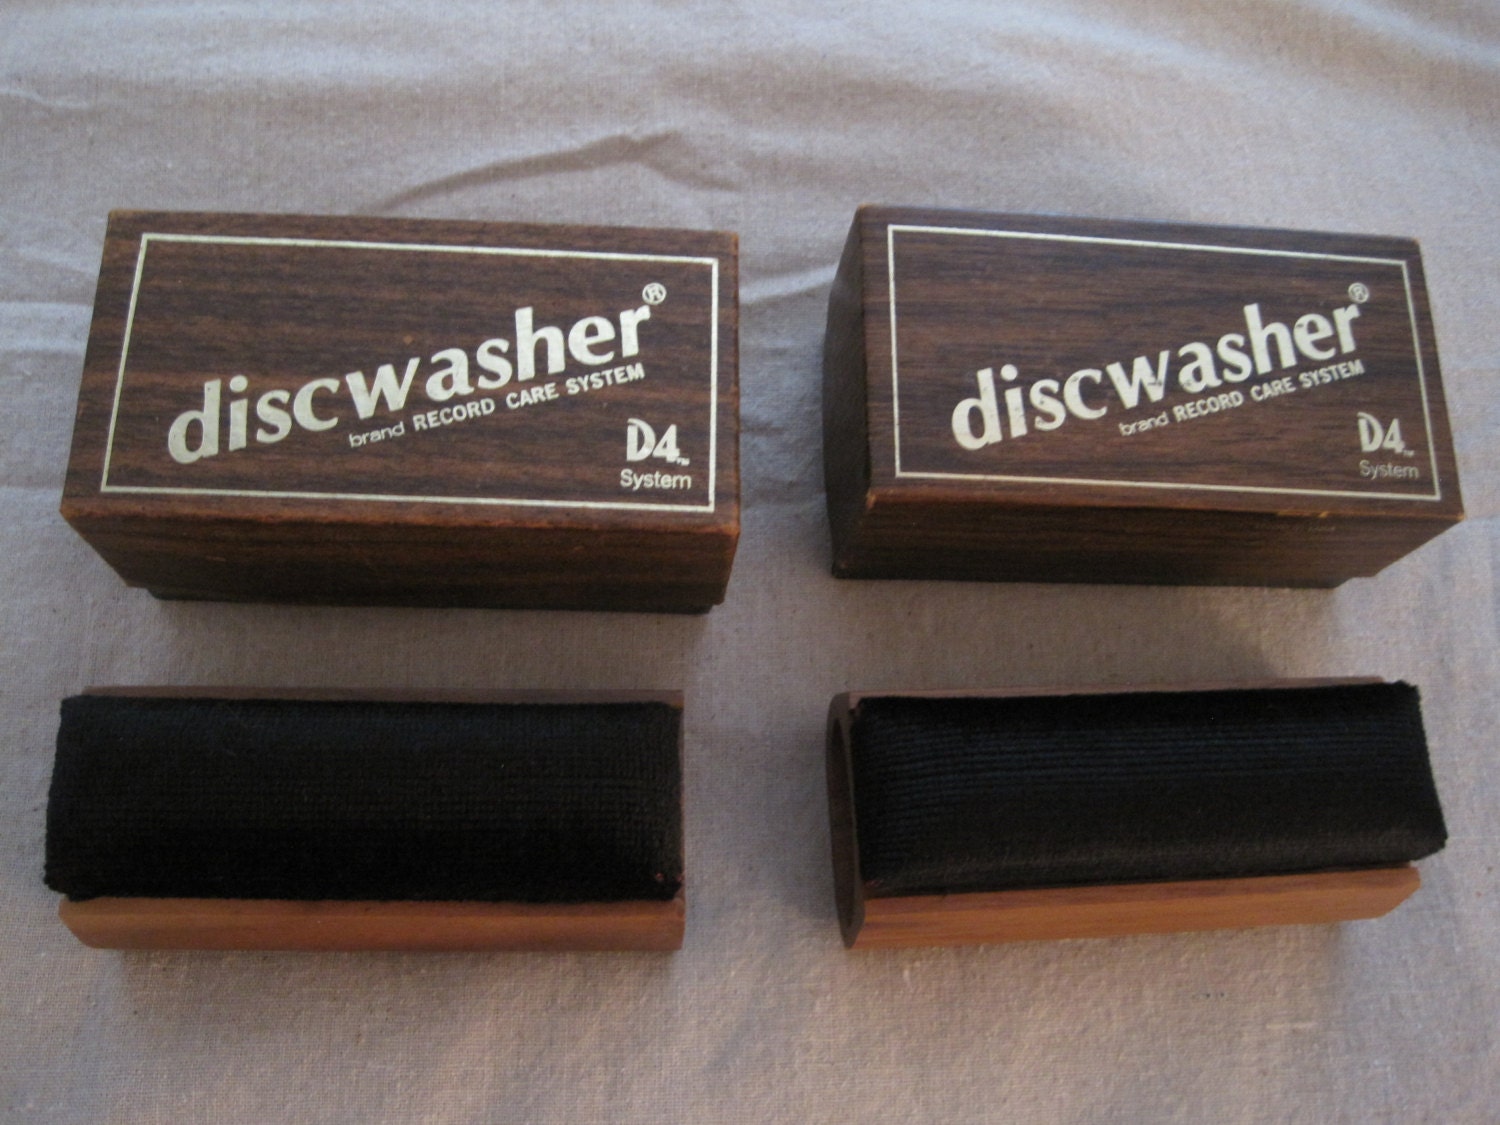 discwasher disktracker review